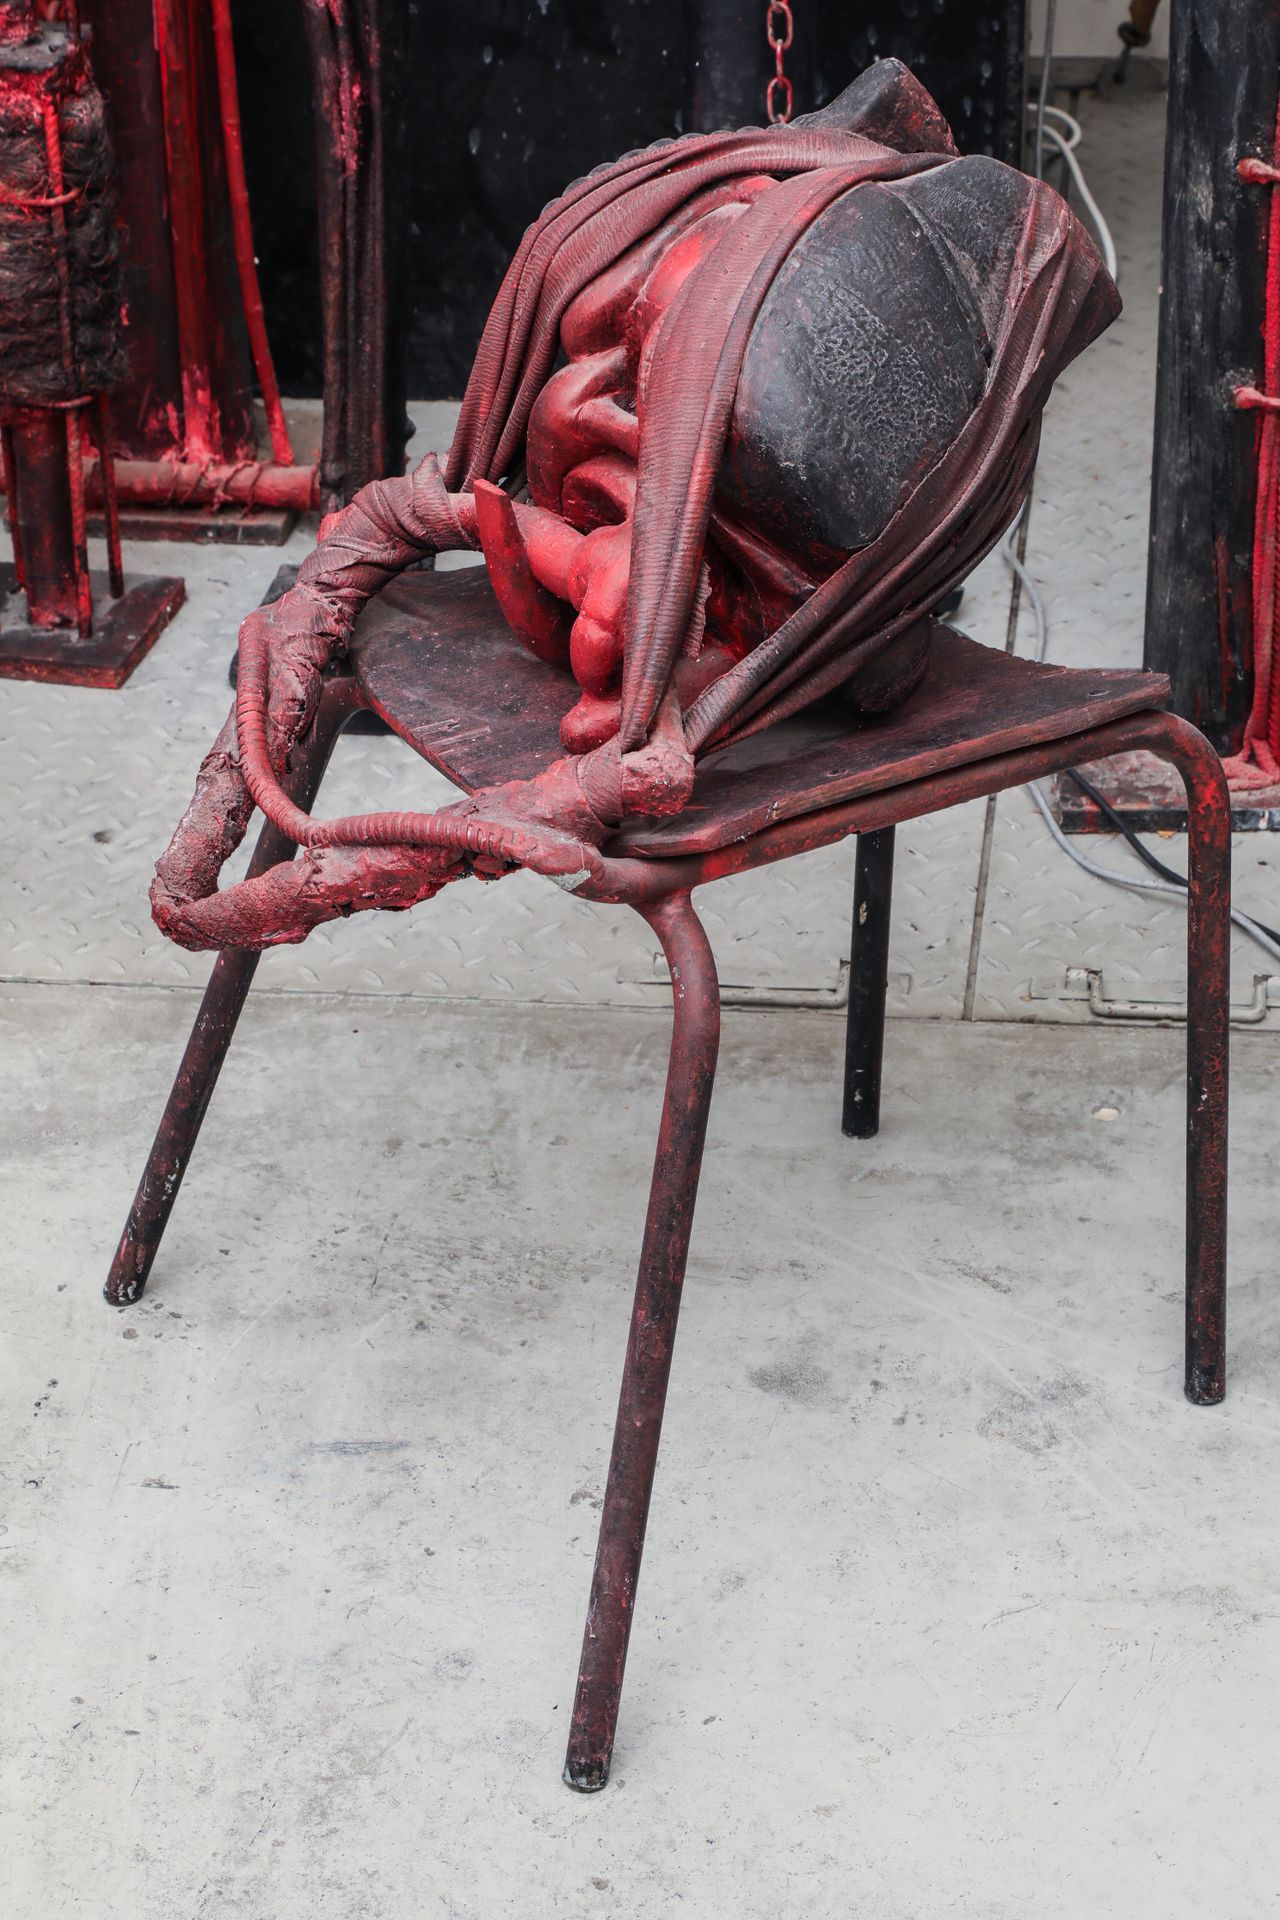 Null 无题

混合材料：回收的凳子，织物，涂漆的木材...

72x60x50厘米